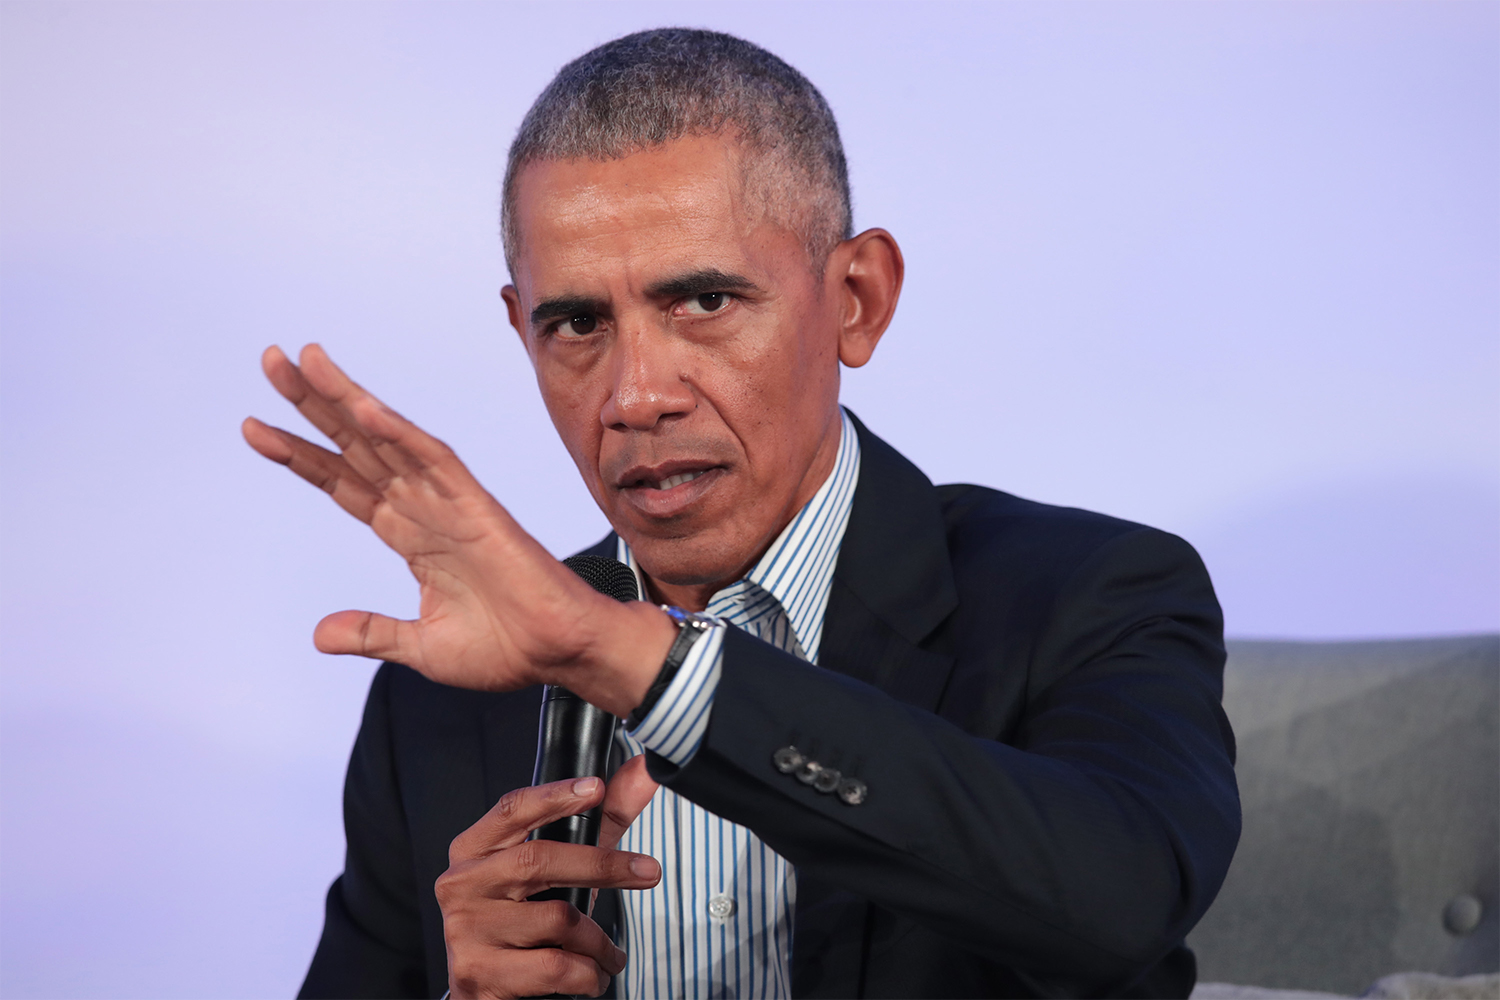 Barack Obama Calls for “Real Change” Amid George Floyd Protests ...